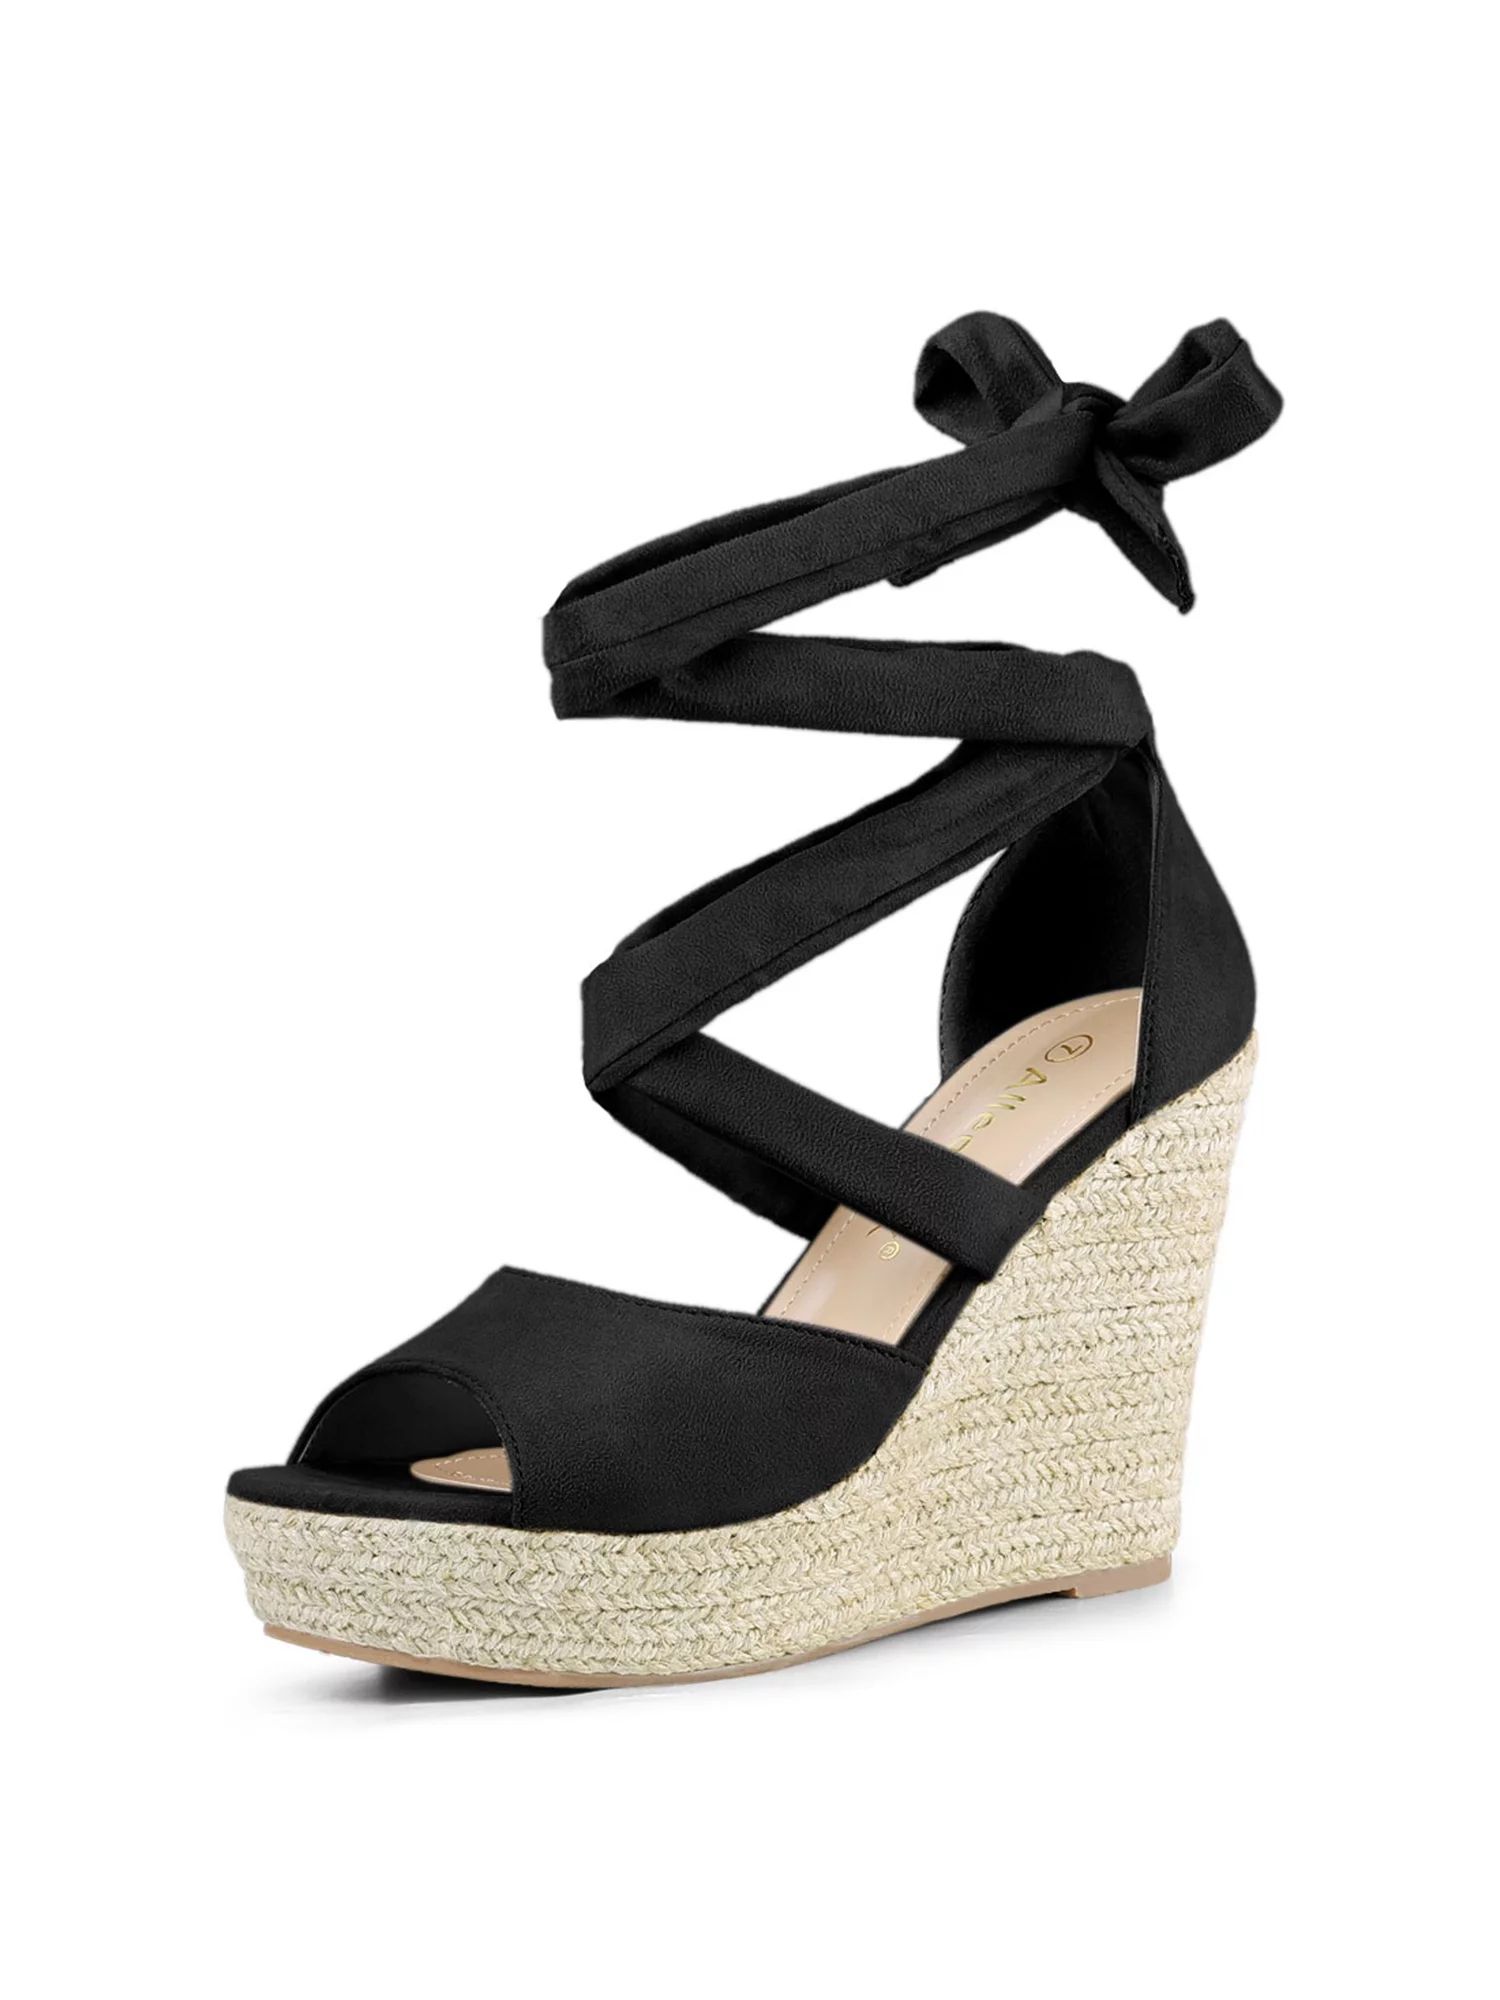 Allegra K Women's Platform Sandals Solid Lace up Espadrilles Wedges Sandals | Walmart (US)